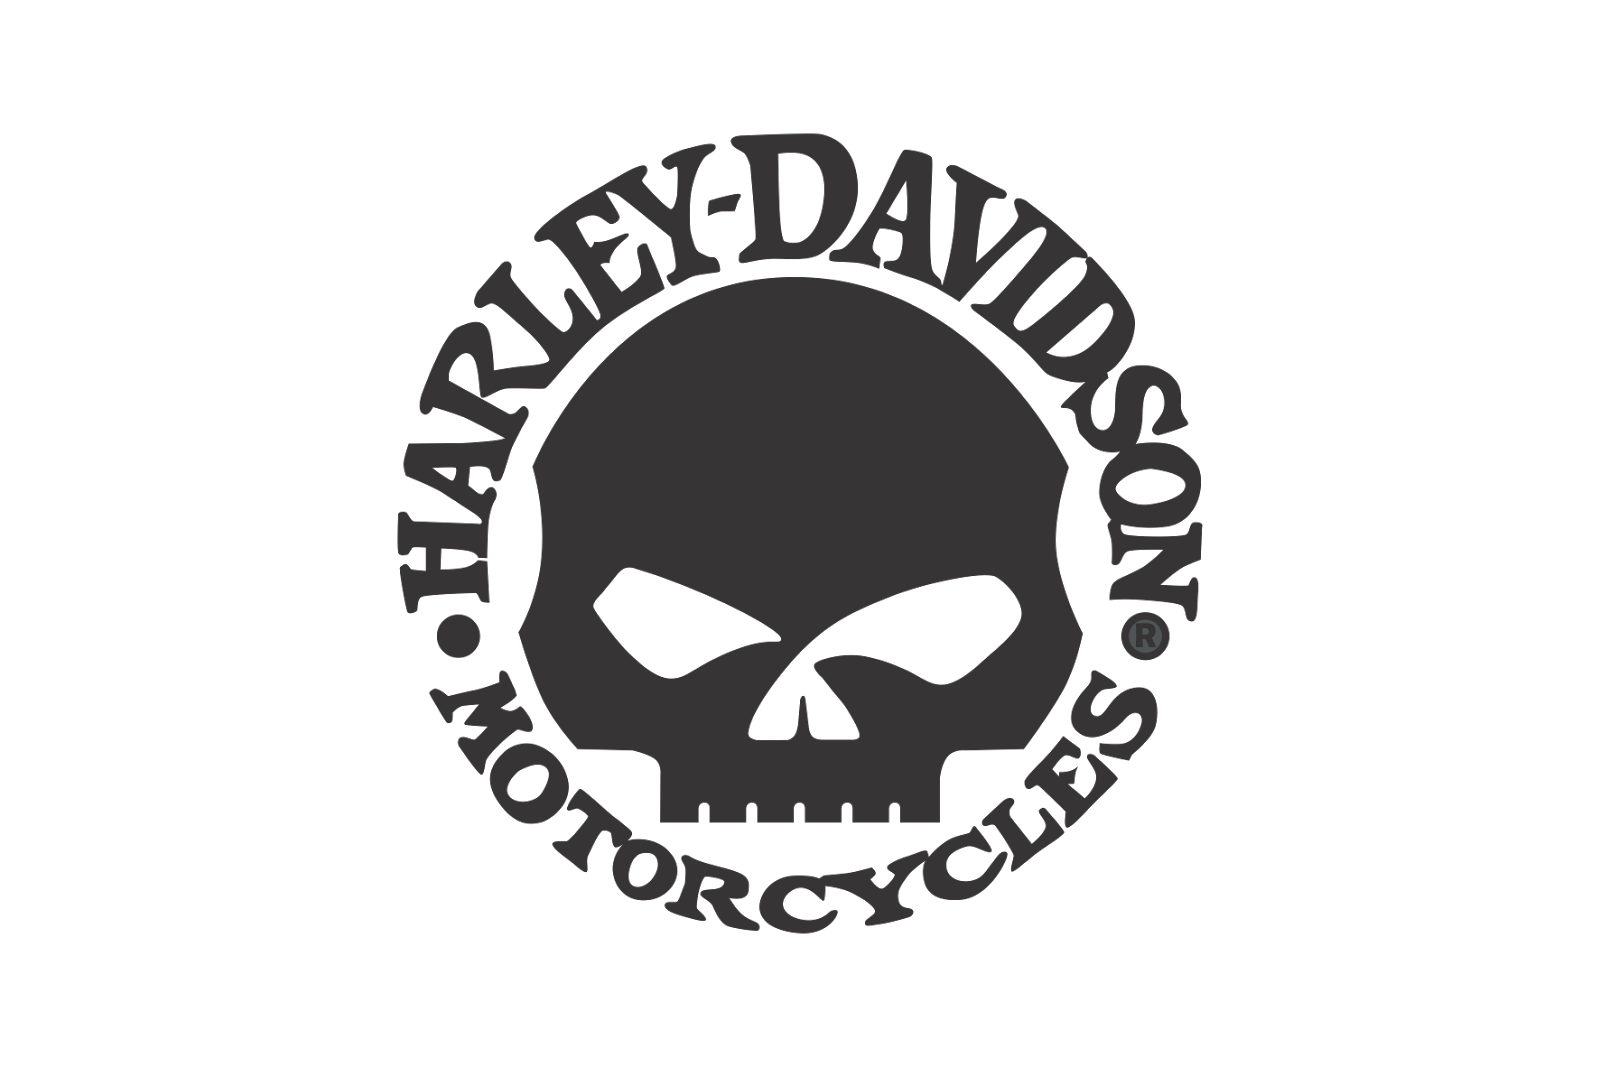 Logo+Harley Davidson Skull